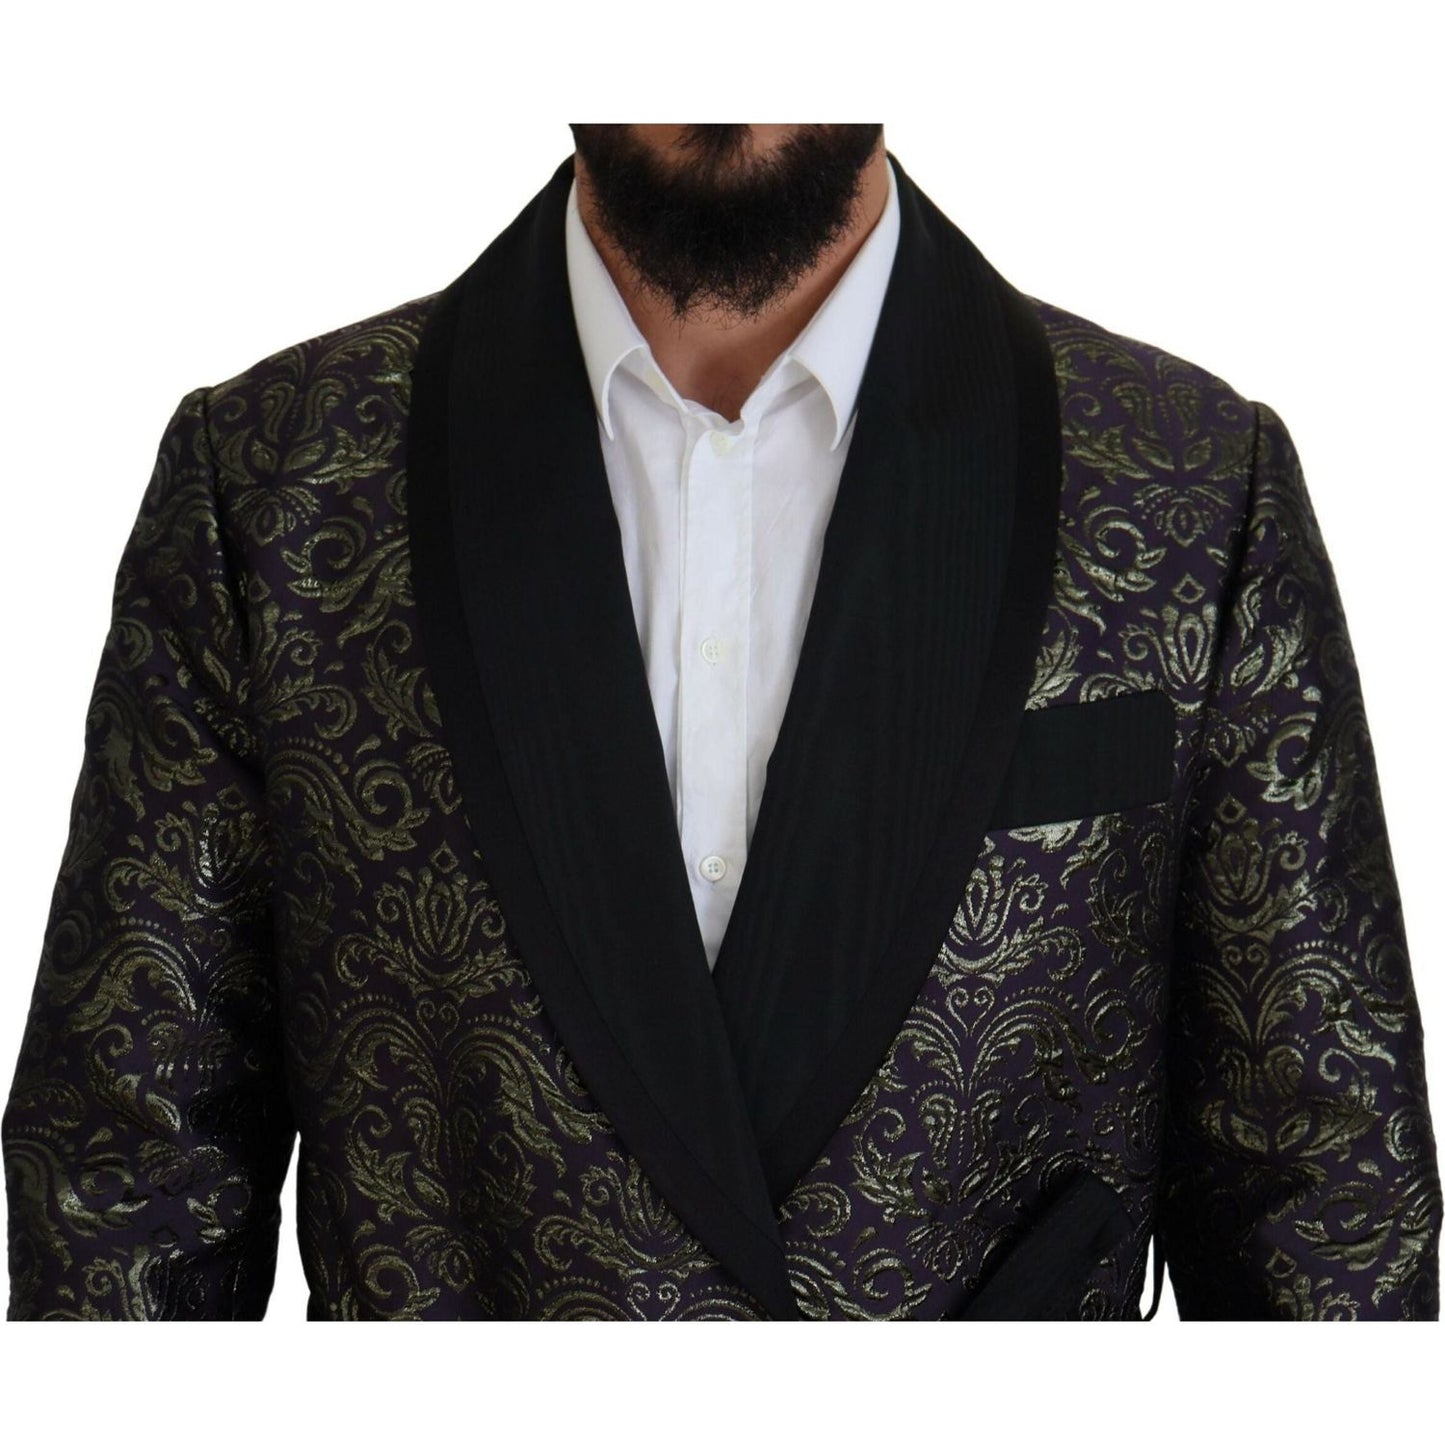 Dolce & Gabbana Gold Jacquard Robe Jacket gold-purple-baroque-jacket-blazer-robe IMG_9633-scaled-abfa6a78-f81.jpg